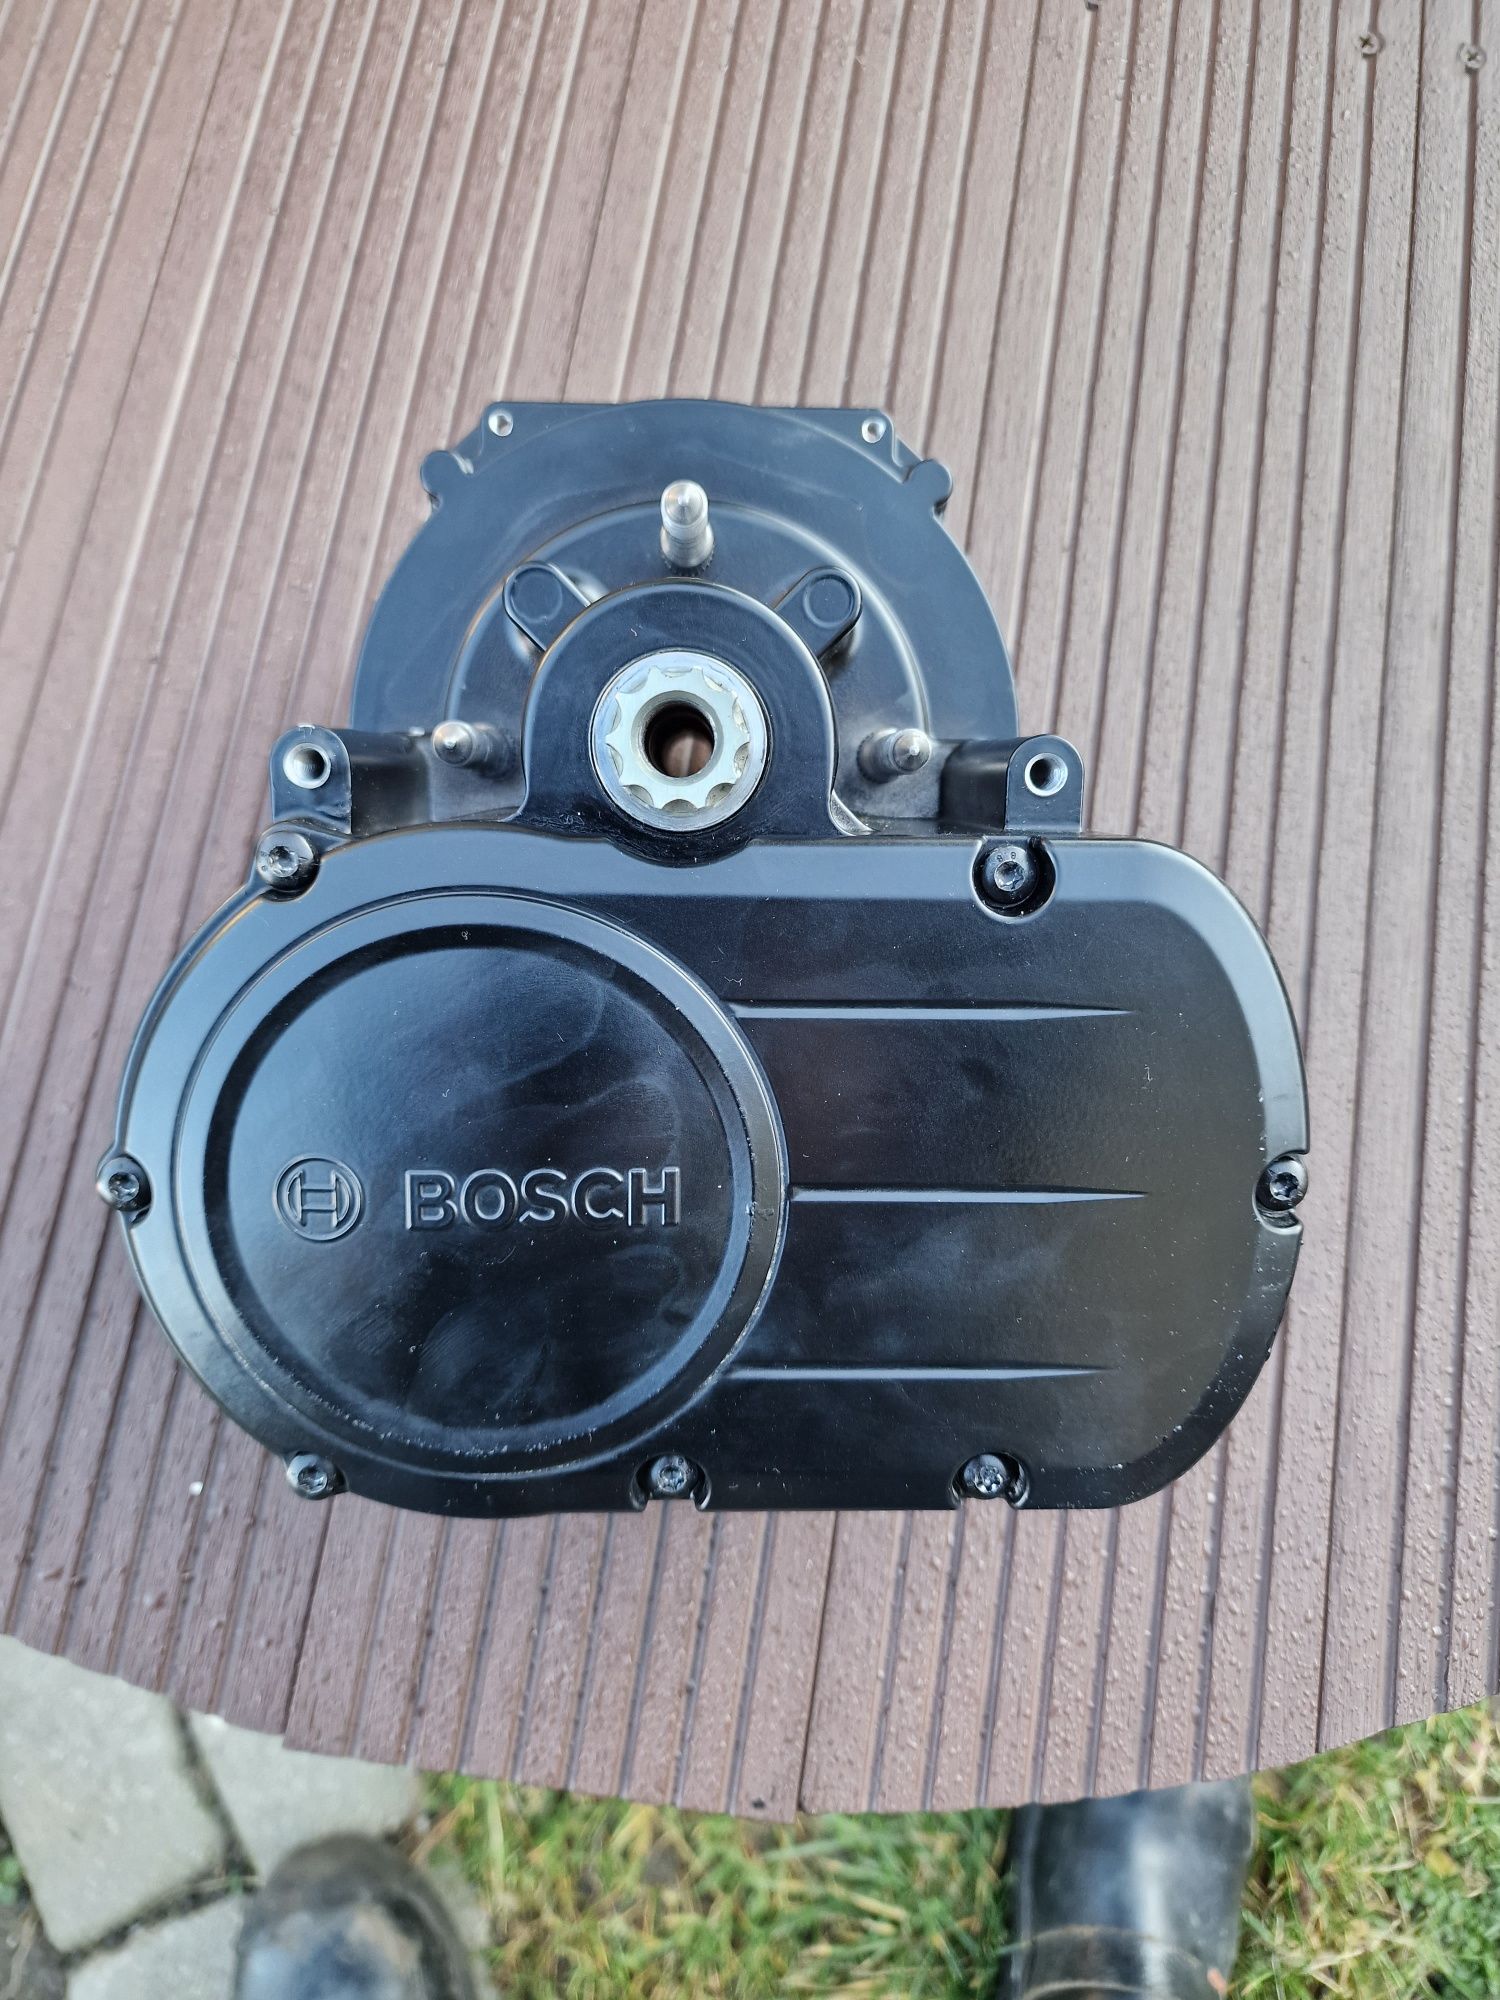 Silnik Bosch Classic speed vmax bez limitu kmh przebieg 2398.4